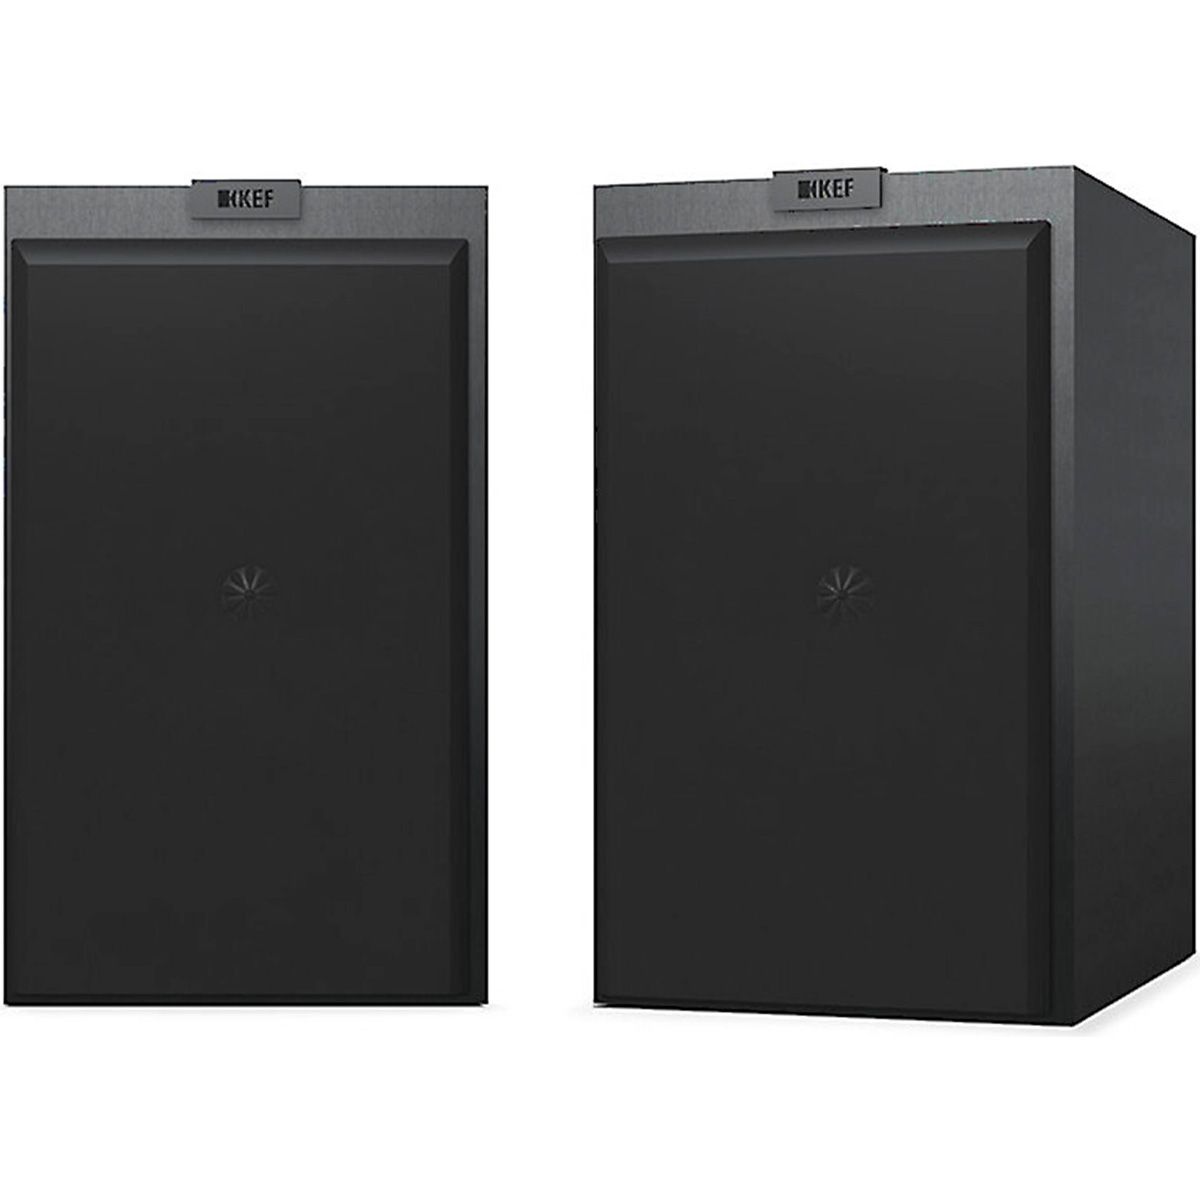 KEF Q350 Bookshelf Speaker - Black - Pair - front view of pair with grilles